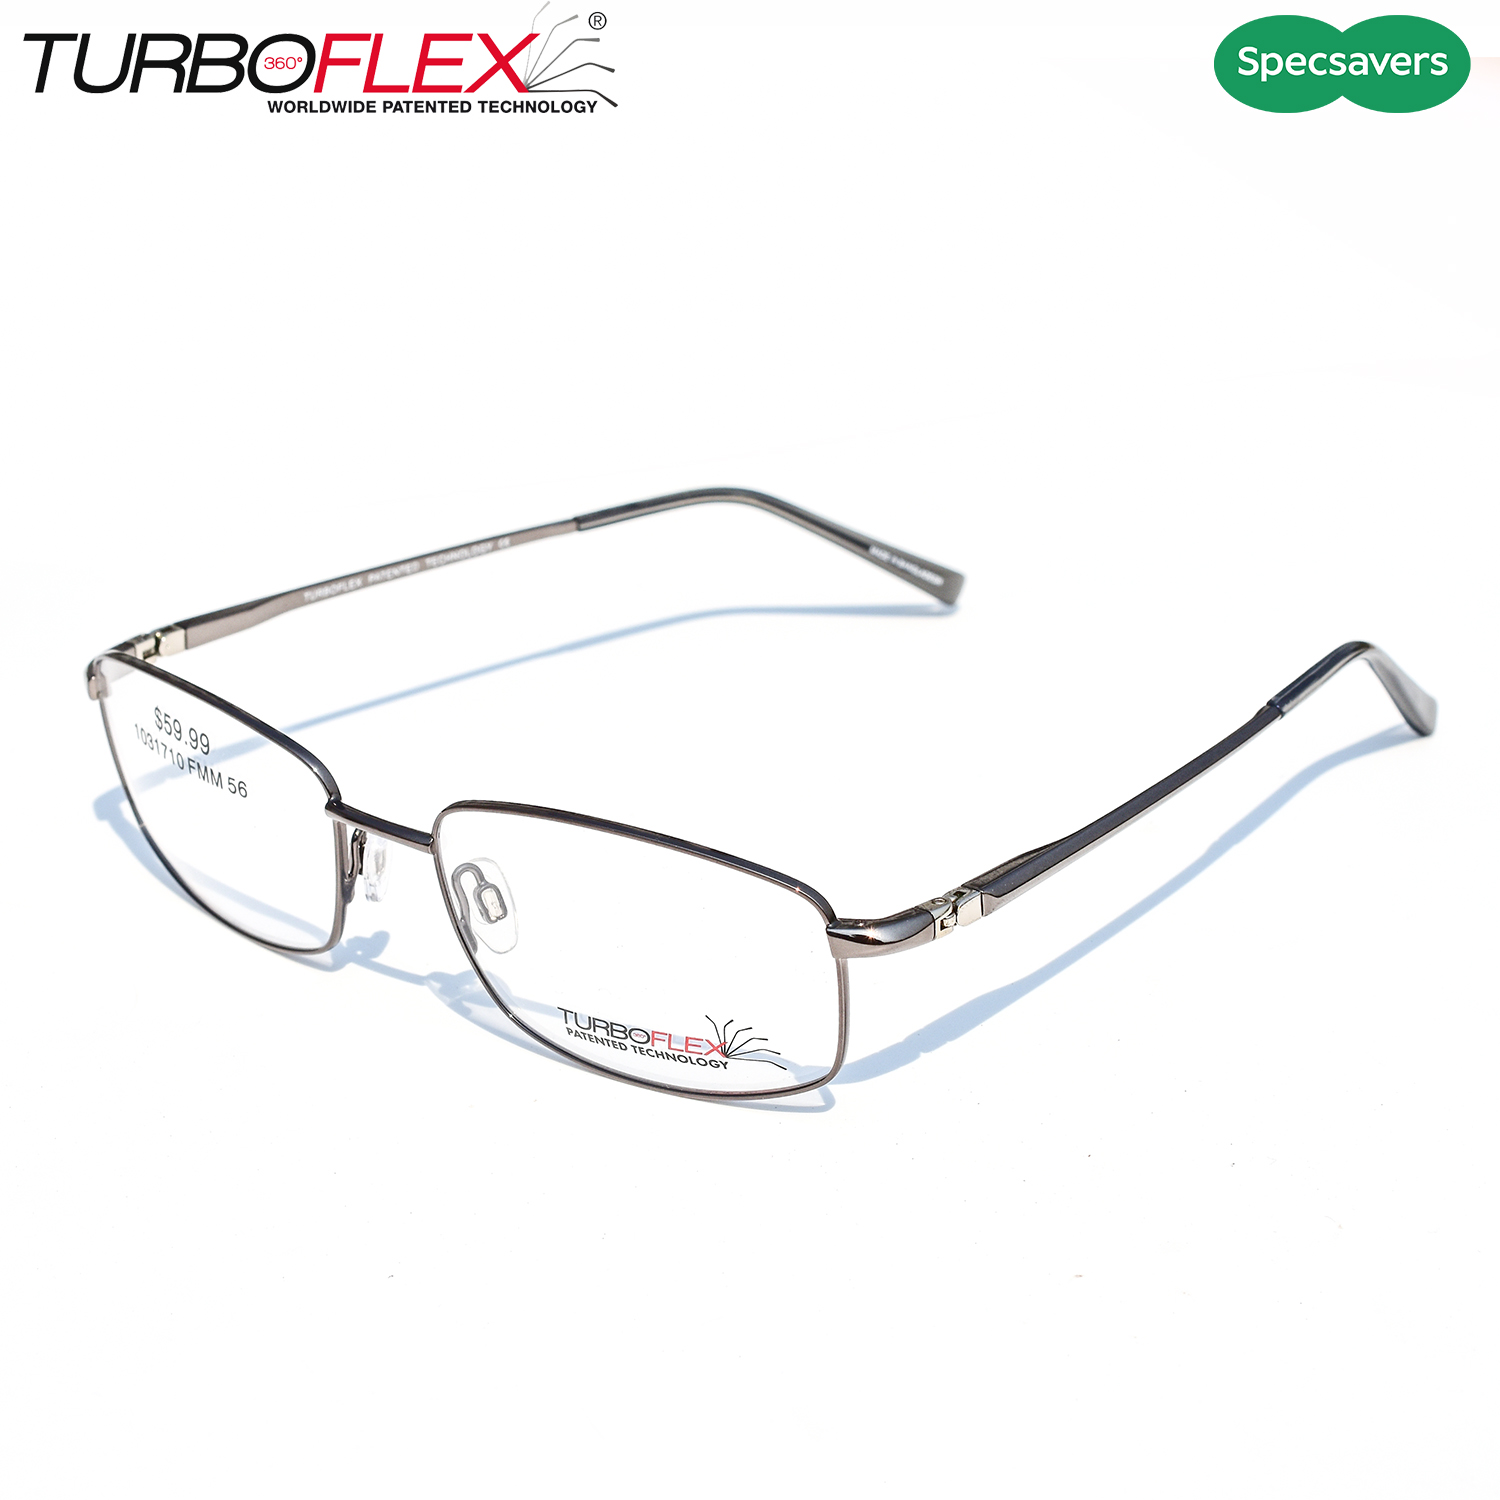 Specsavers Turboflex T2465 1